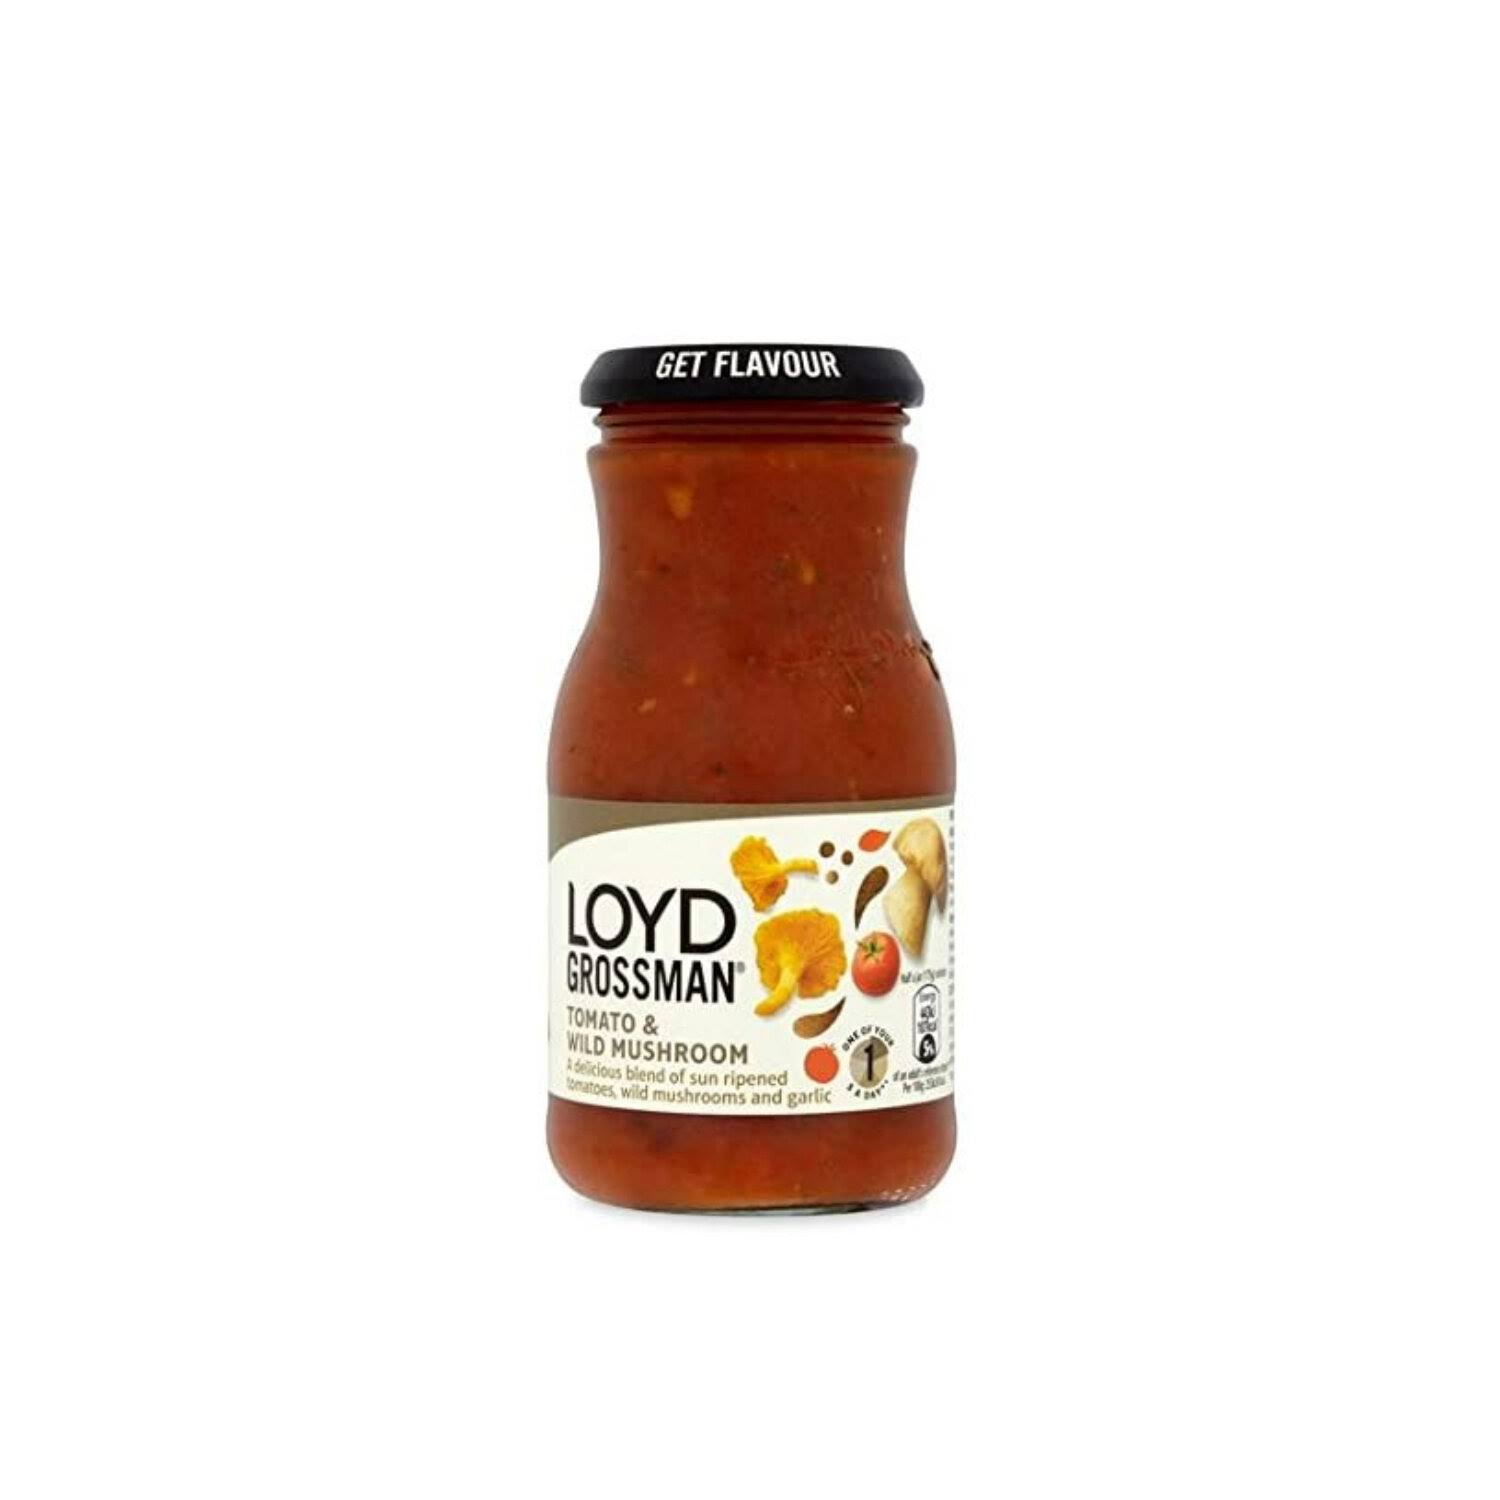 Loyd Grossman Sauce - Tomato and Wild Mushroom, 350g